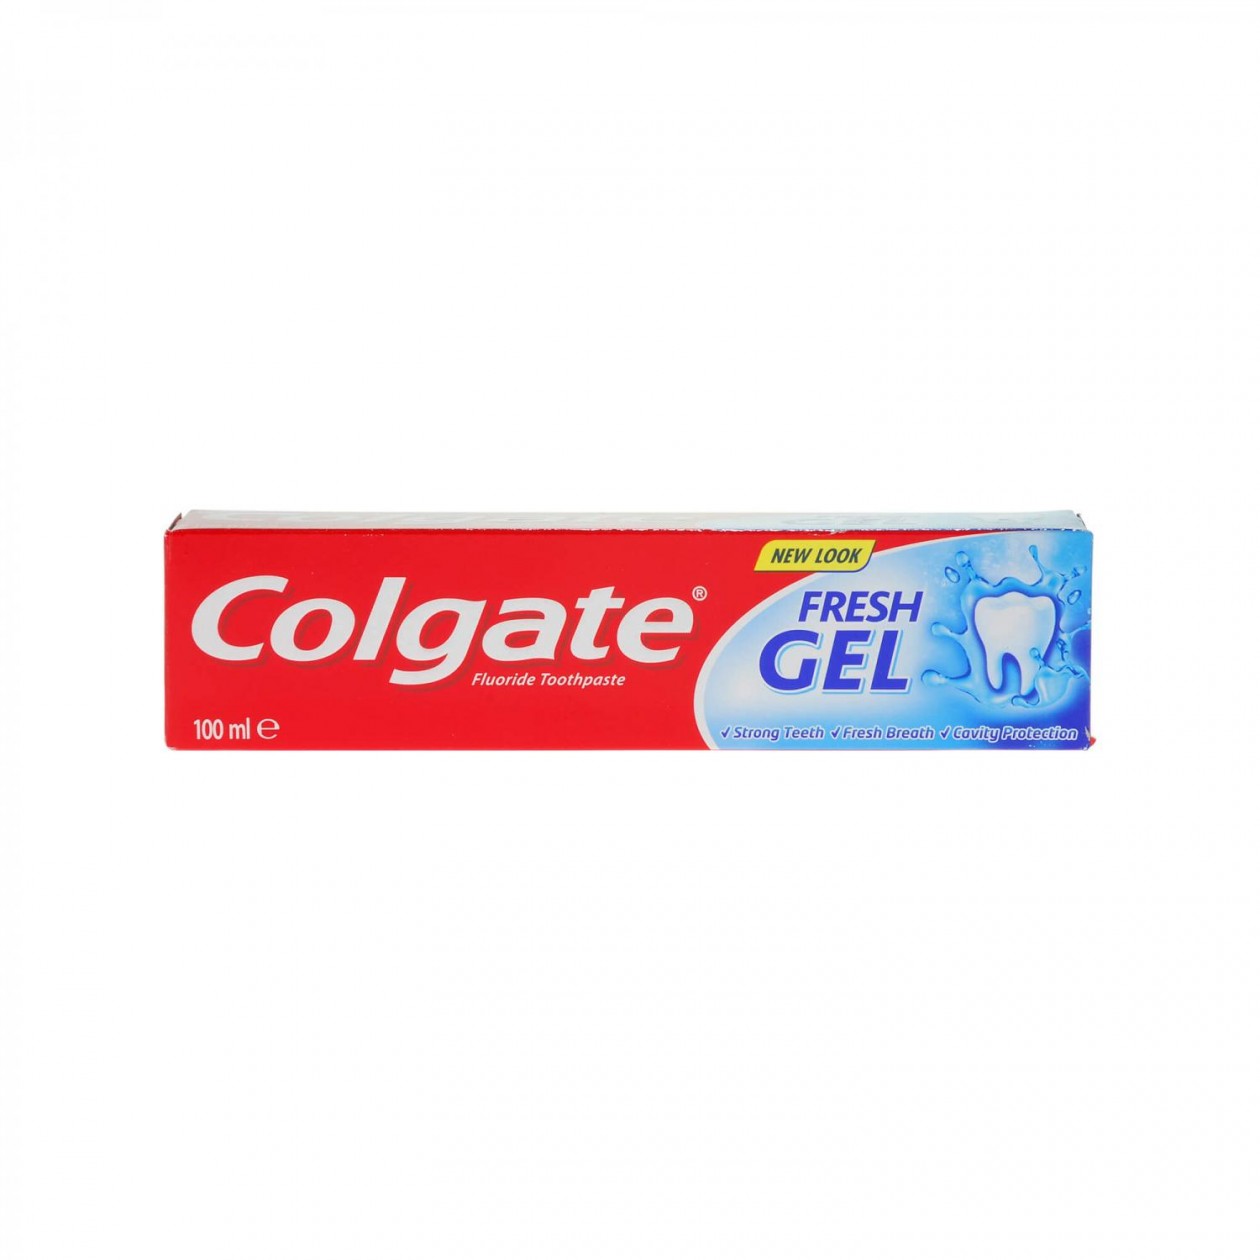 Colgate Toothpaste Fresh Gel 100mL